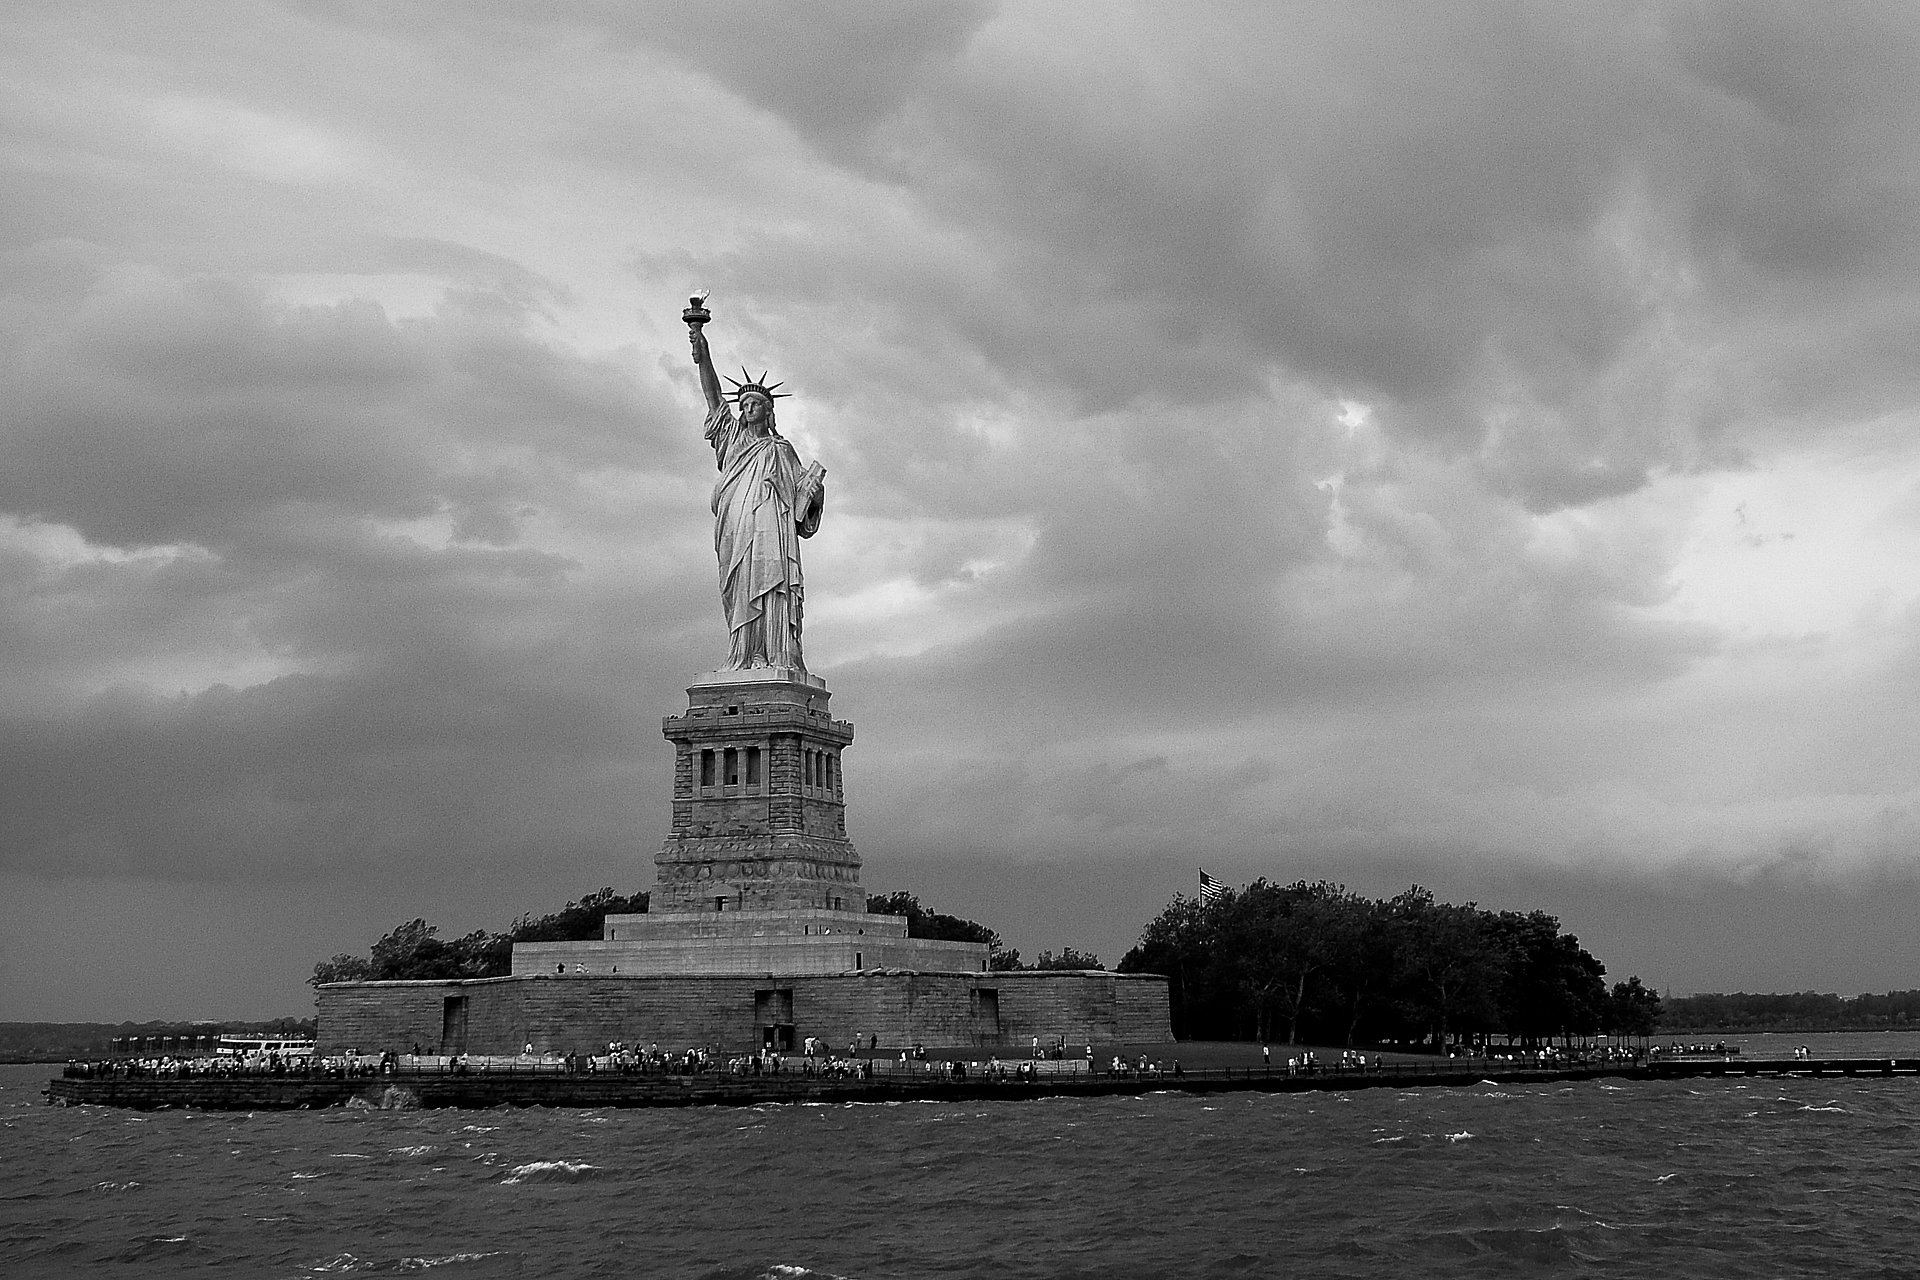 Statue of liberty, New York 2009